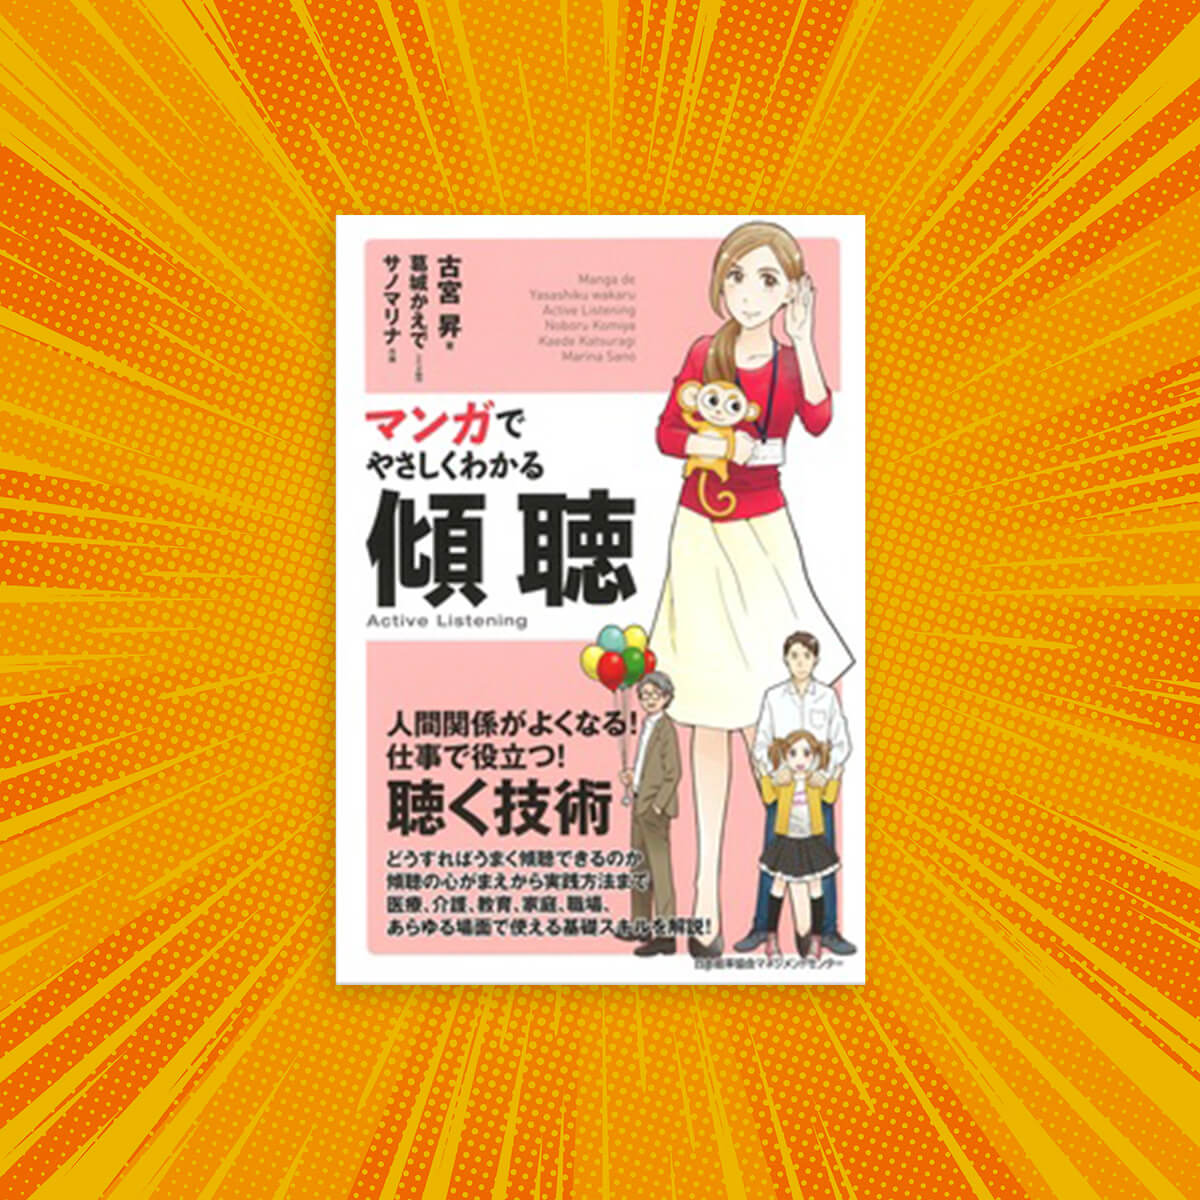 Easy reading through Manga | Active Listening